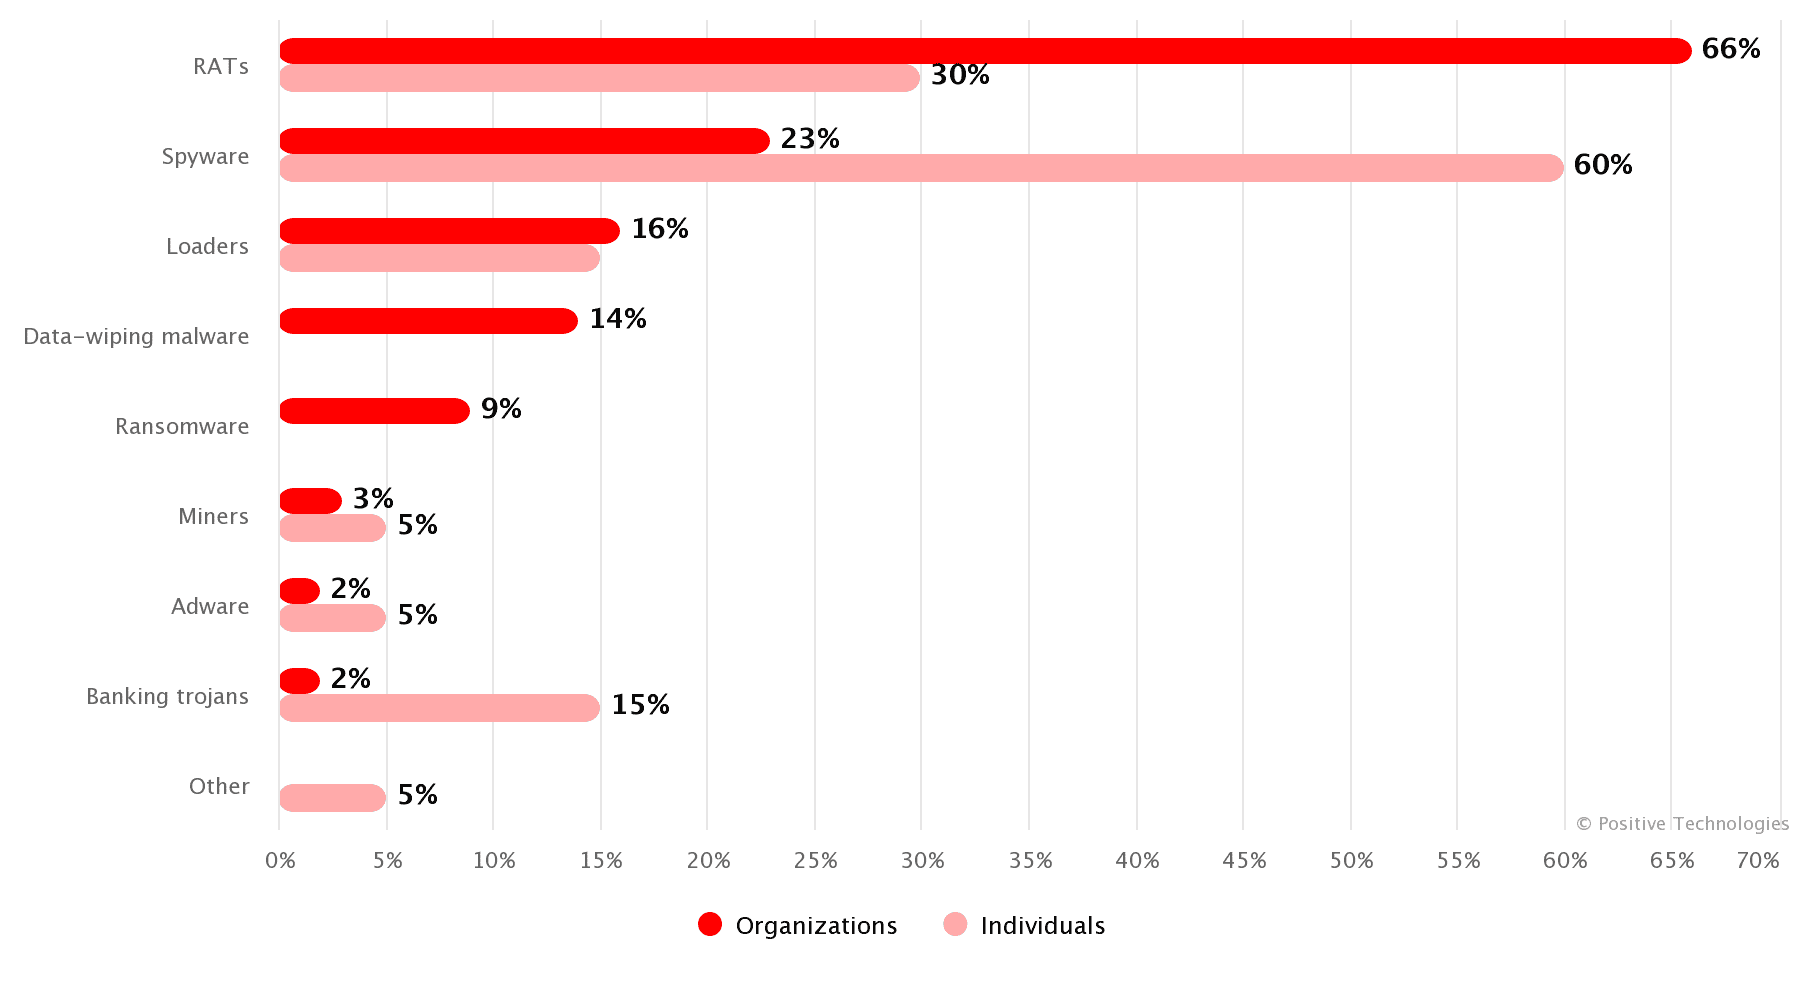 Types of malware (percentage of malware attacks)